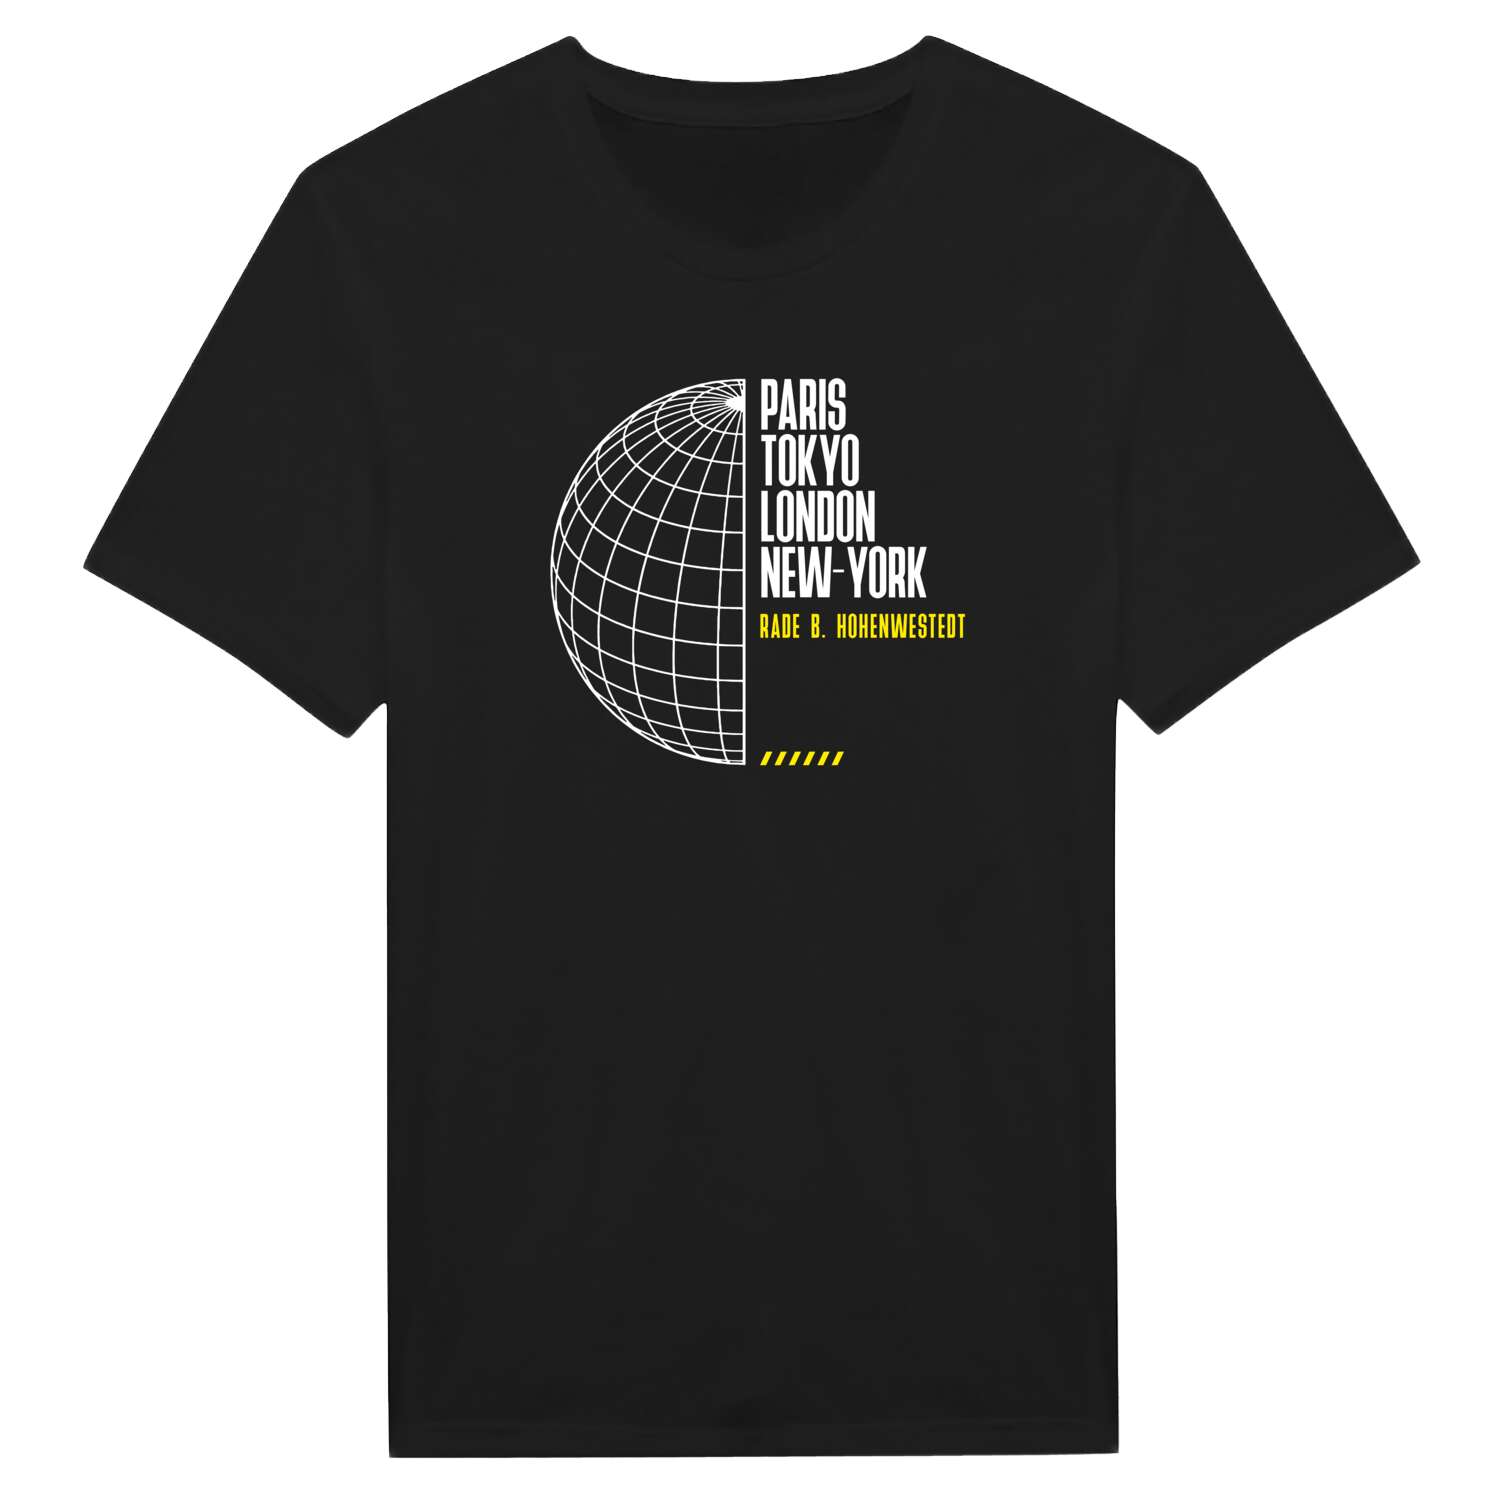 Rade b. Hohenwestedt T-Shirt »Paris Tokyo London«